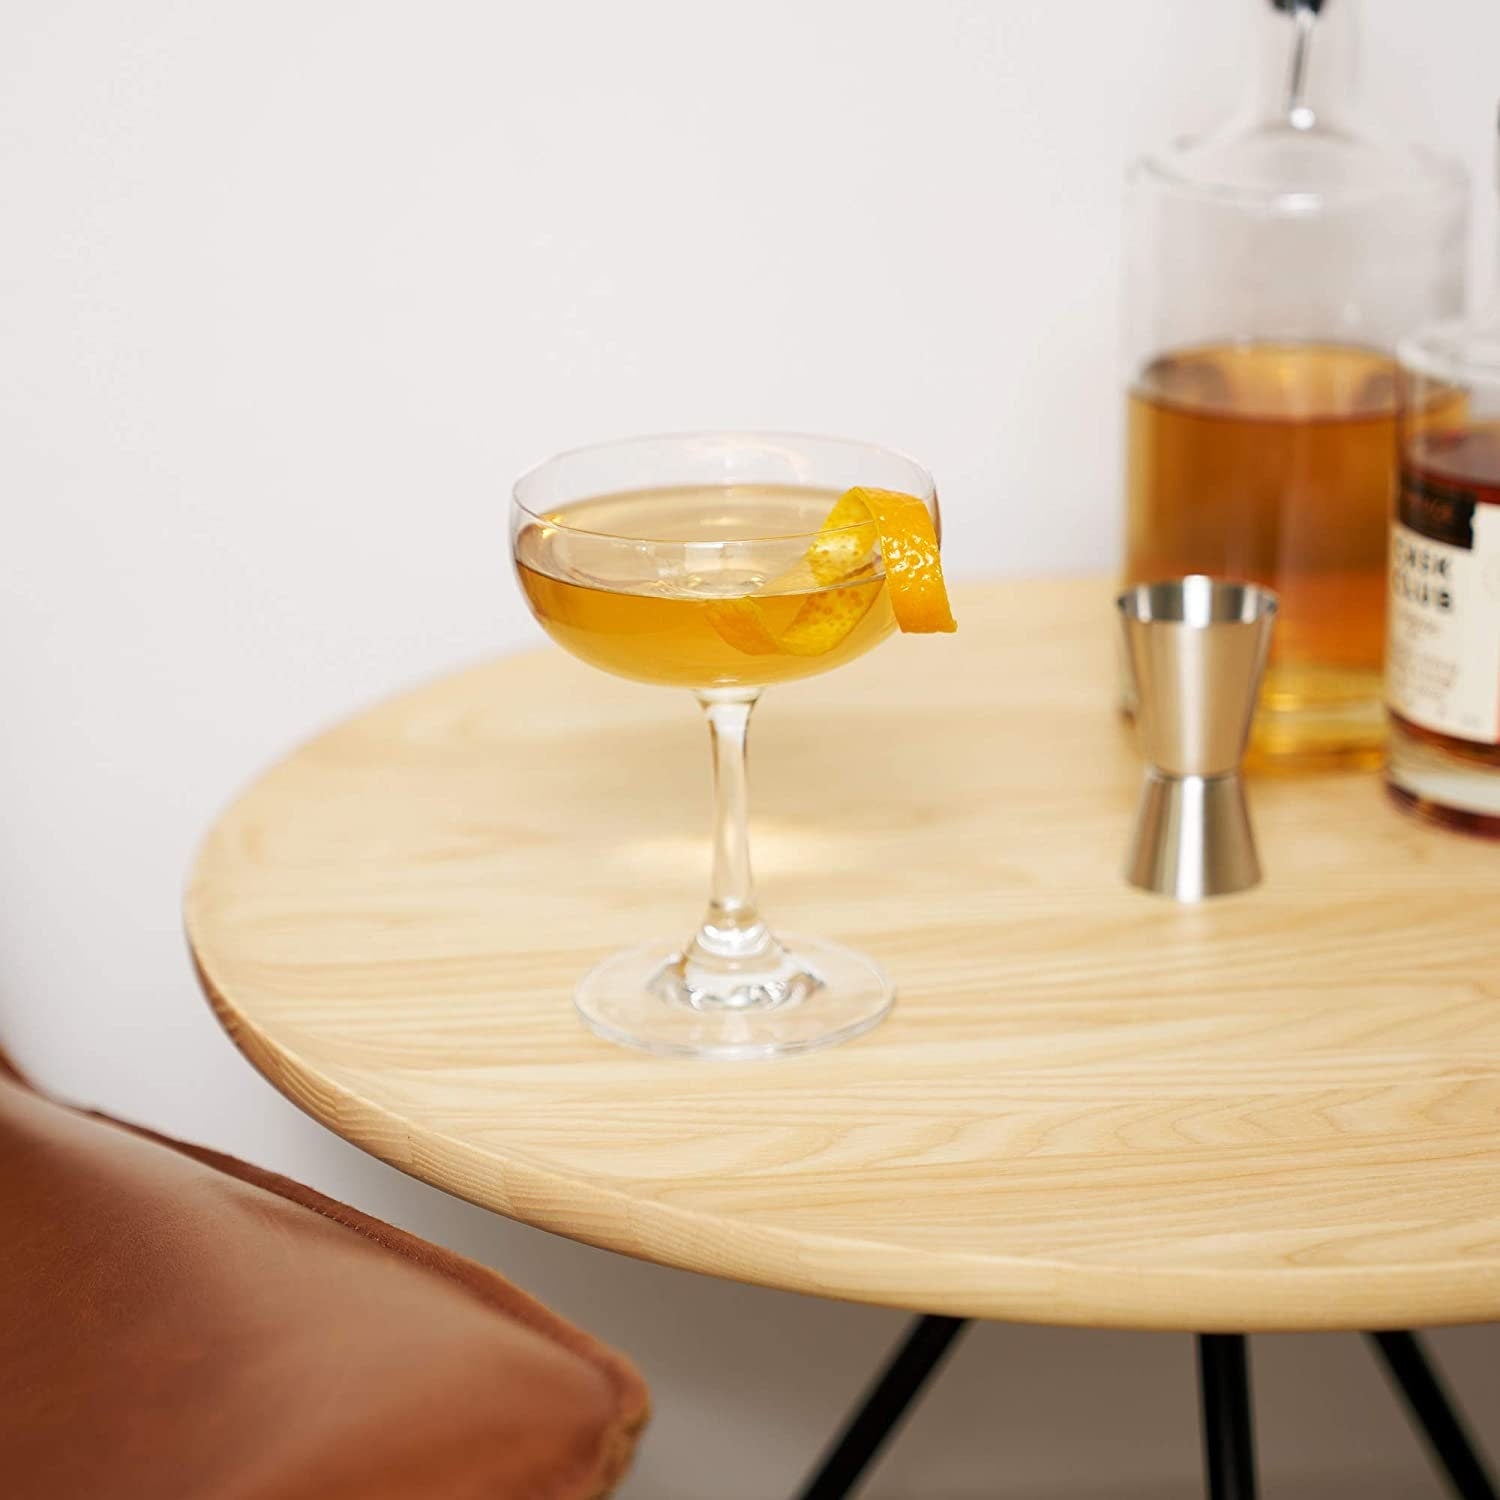 Classic Coupe Glasses for Champagne,  Martini, Daiquiri, Manhattan, Cocktails  (Set of 4) - Raise The Bar Lux  